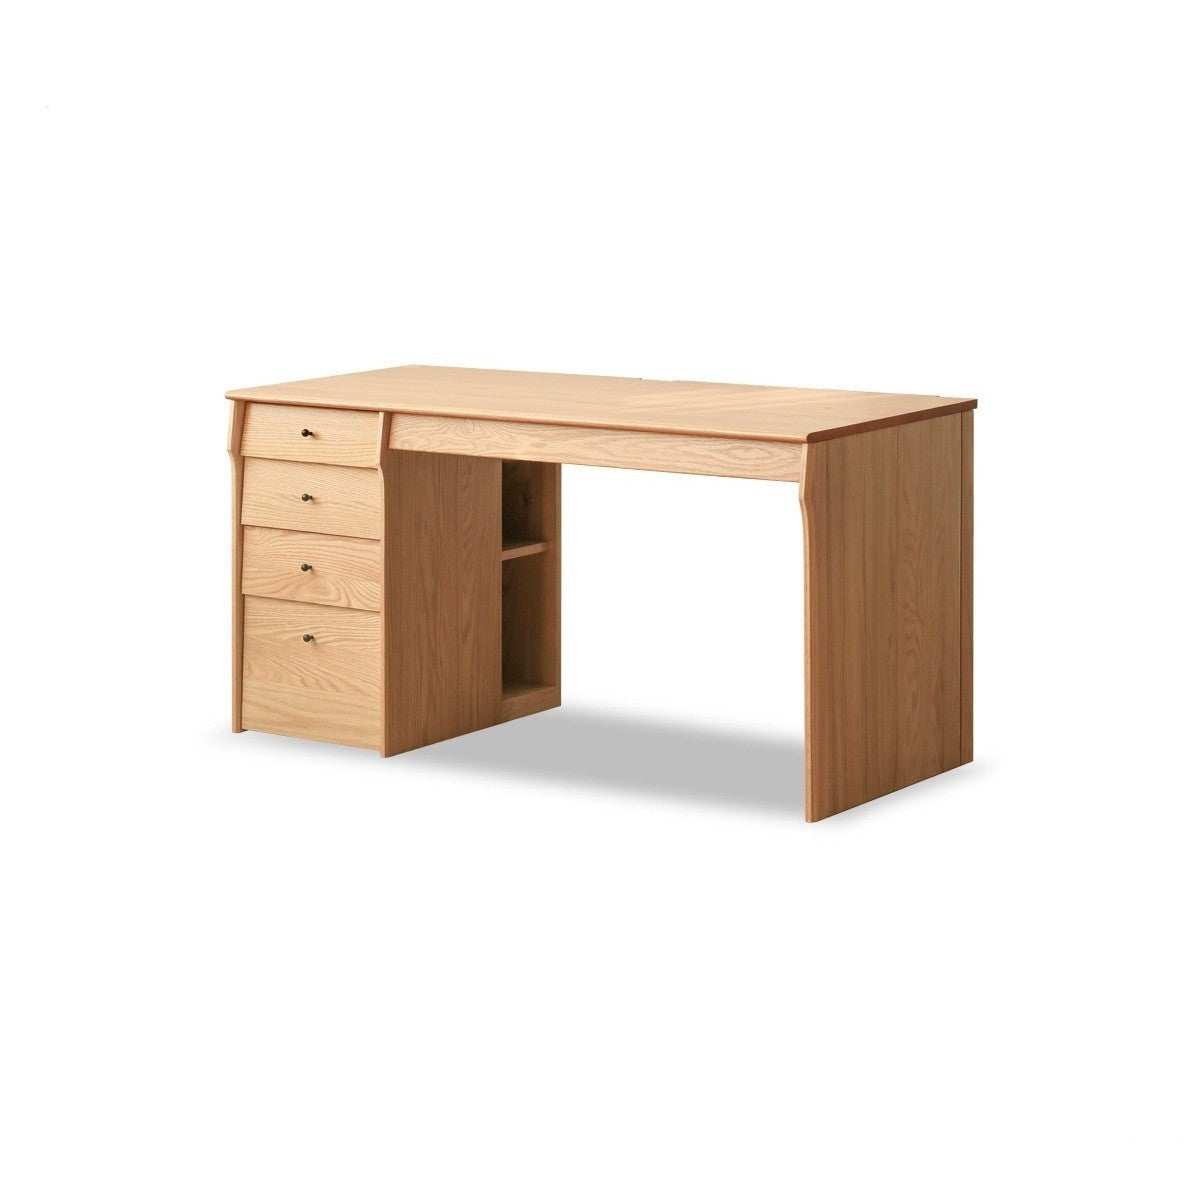 Oak solid wood desk bookshelf integrated Warm light"